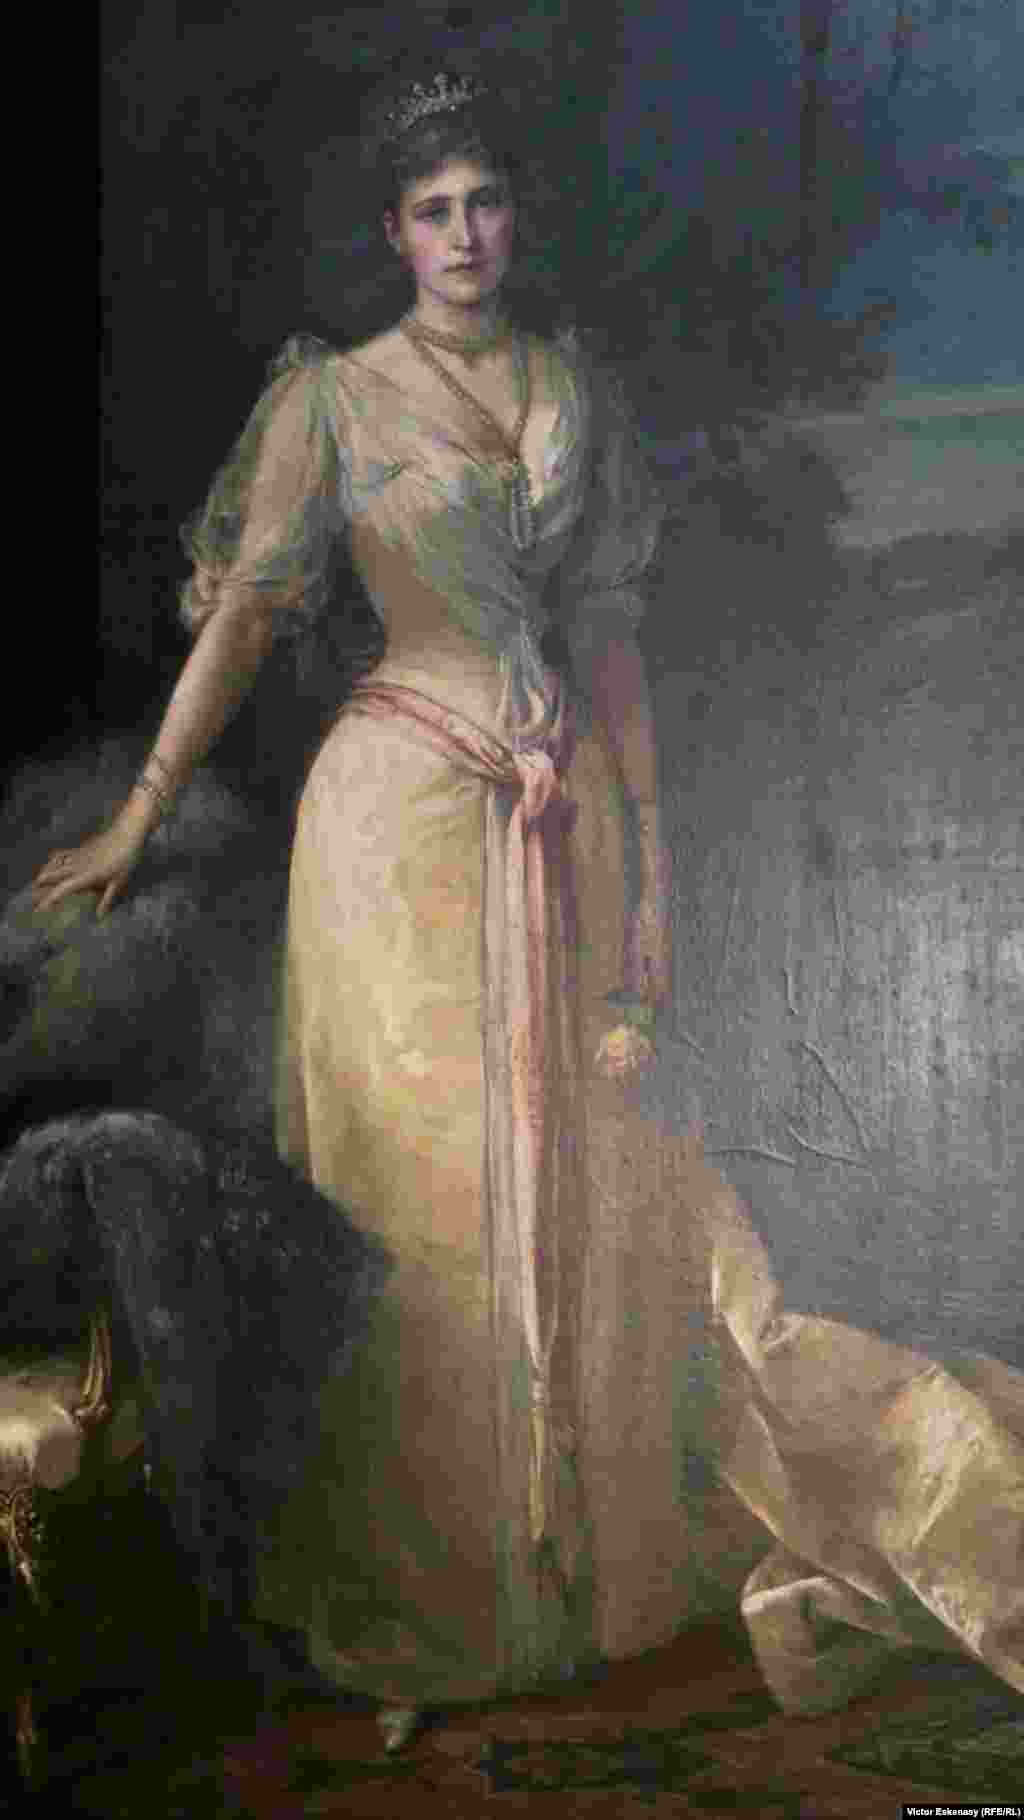 Frederic August von Kaulbach, Prințesa Elisabeta Alexandra Luise Alice von Hessen and bei Rhein/Împărteasa Alexandra Feodorovna, 1890. Ikonen Museum, Frankfurt (Muzeul Național al Azerbaidjanului, Baku).